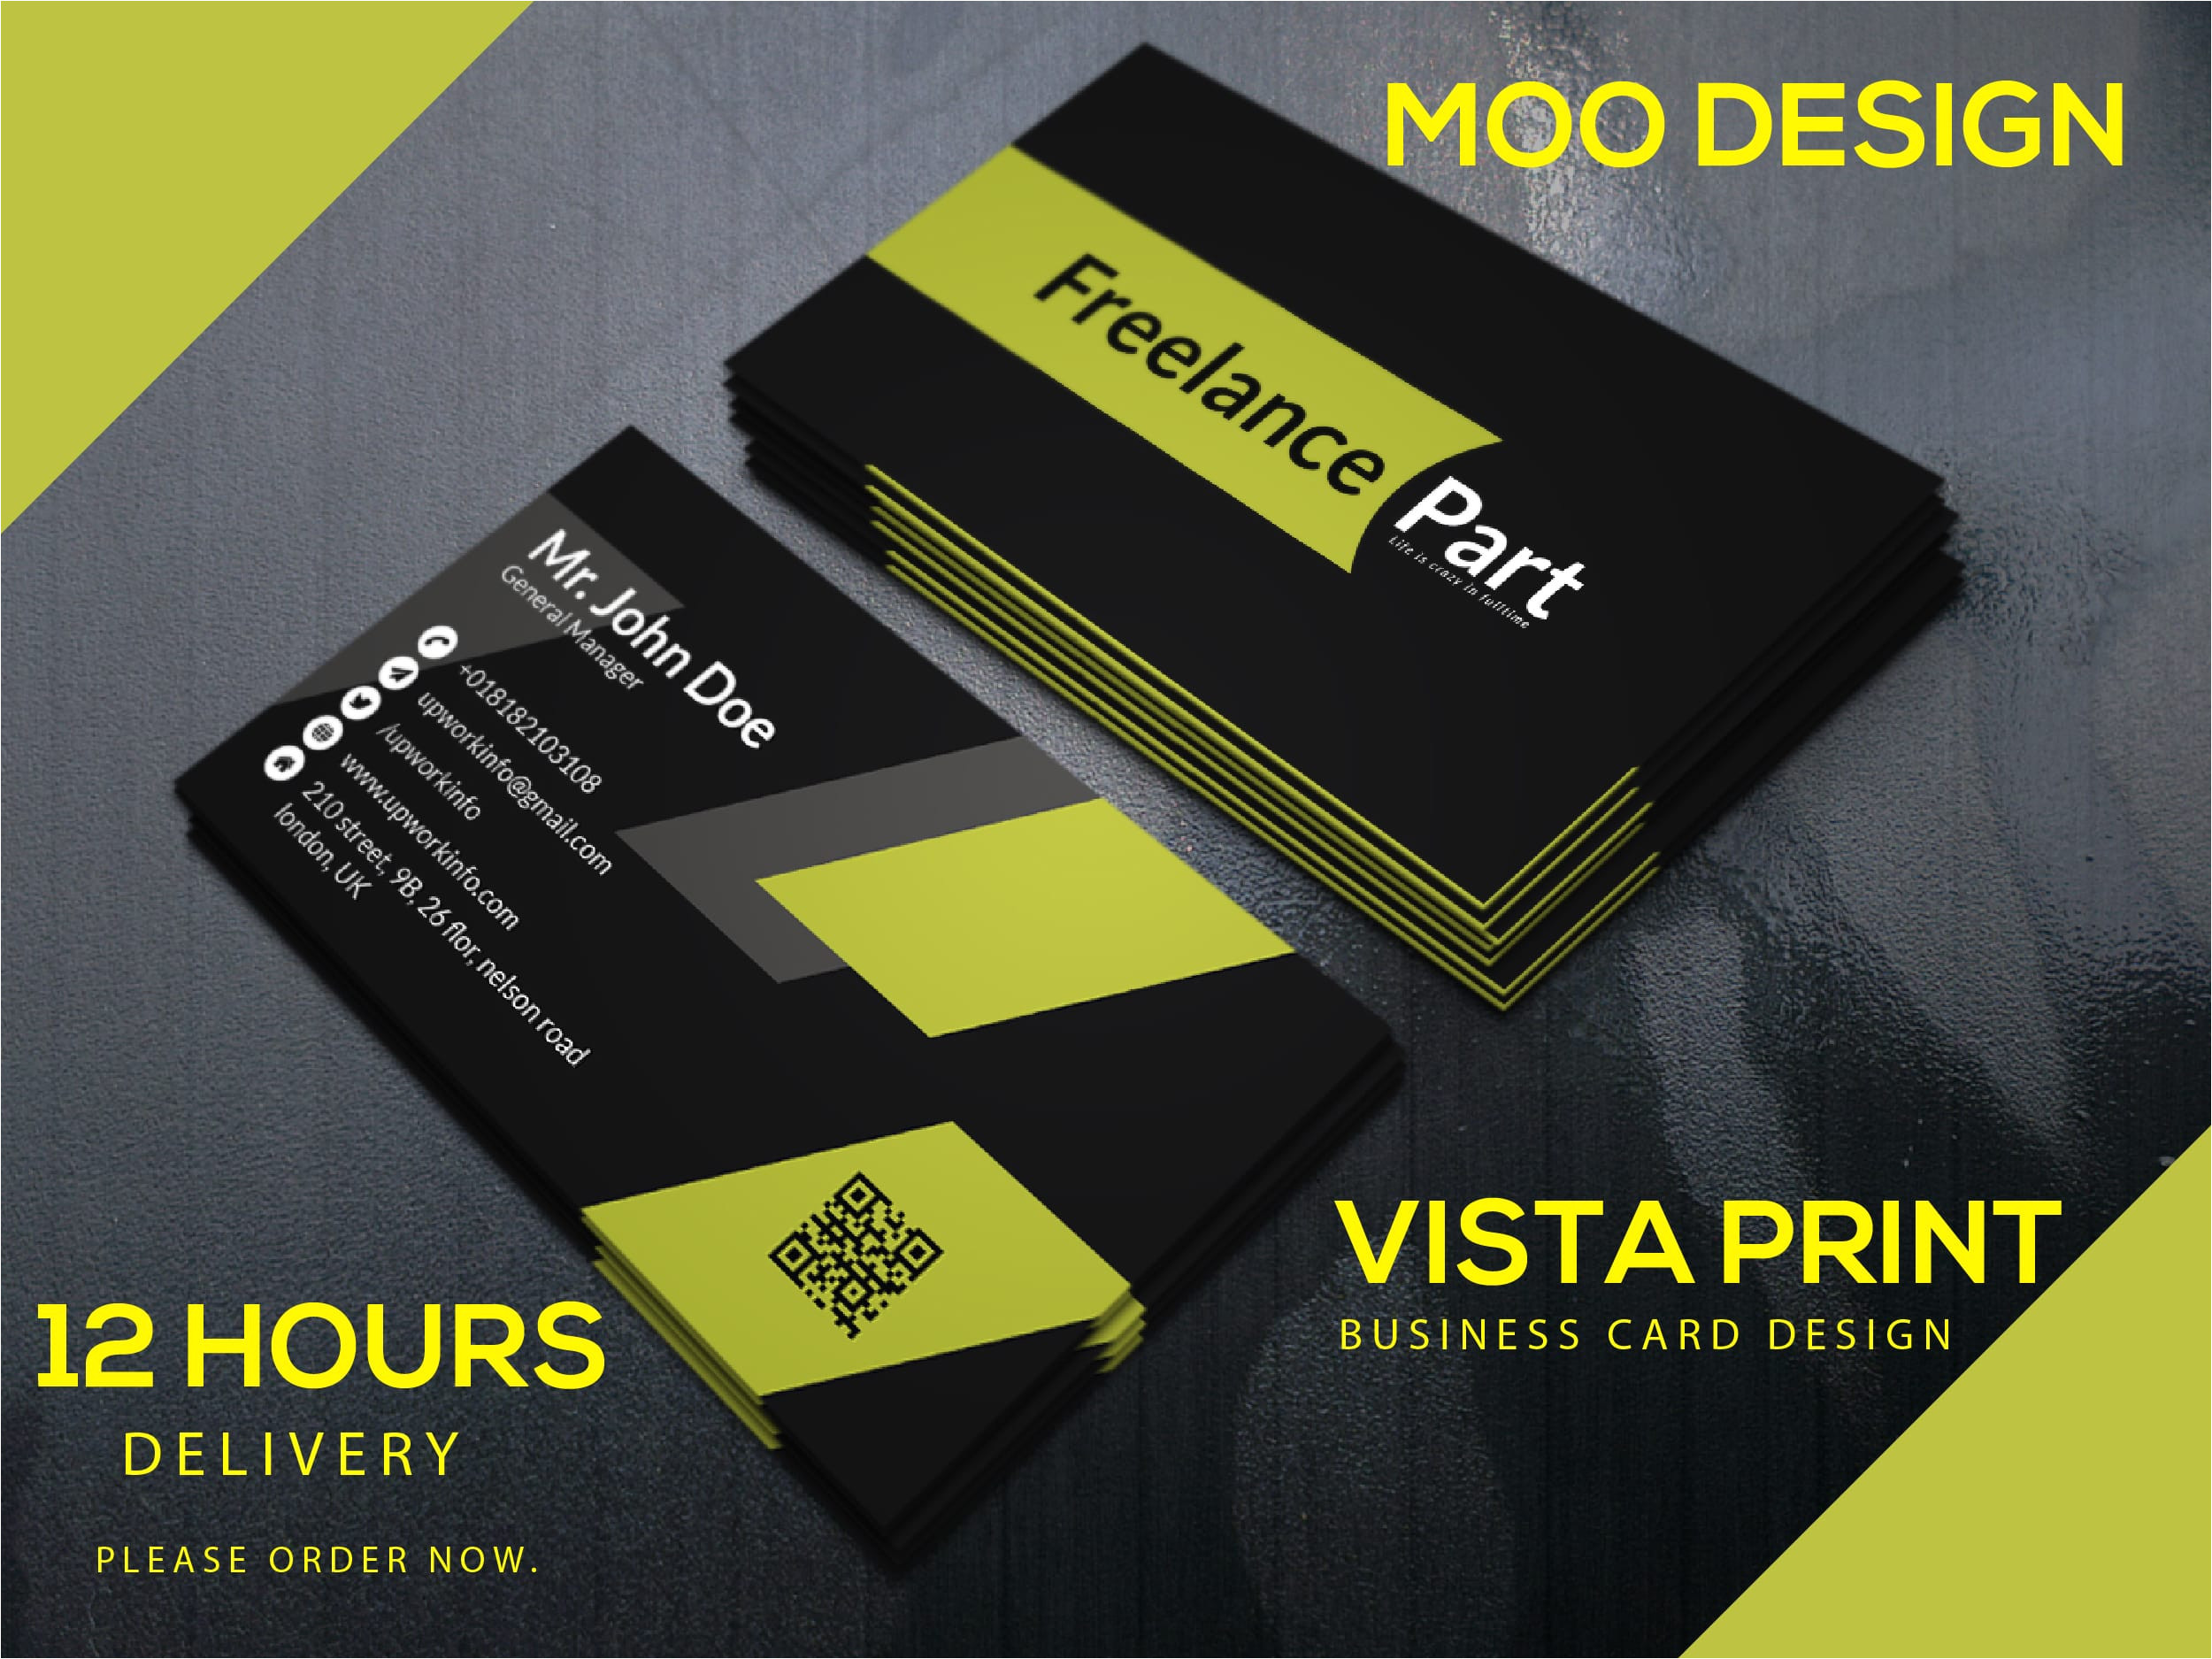 do vista print moo print and gold foil business card design jpg